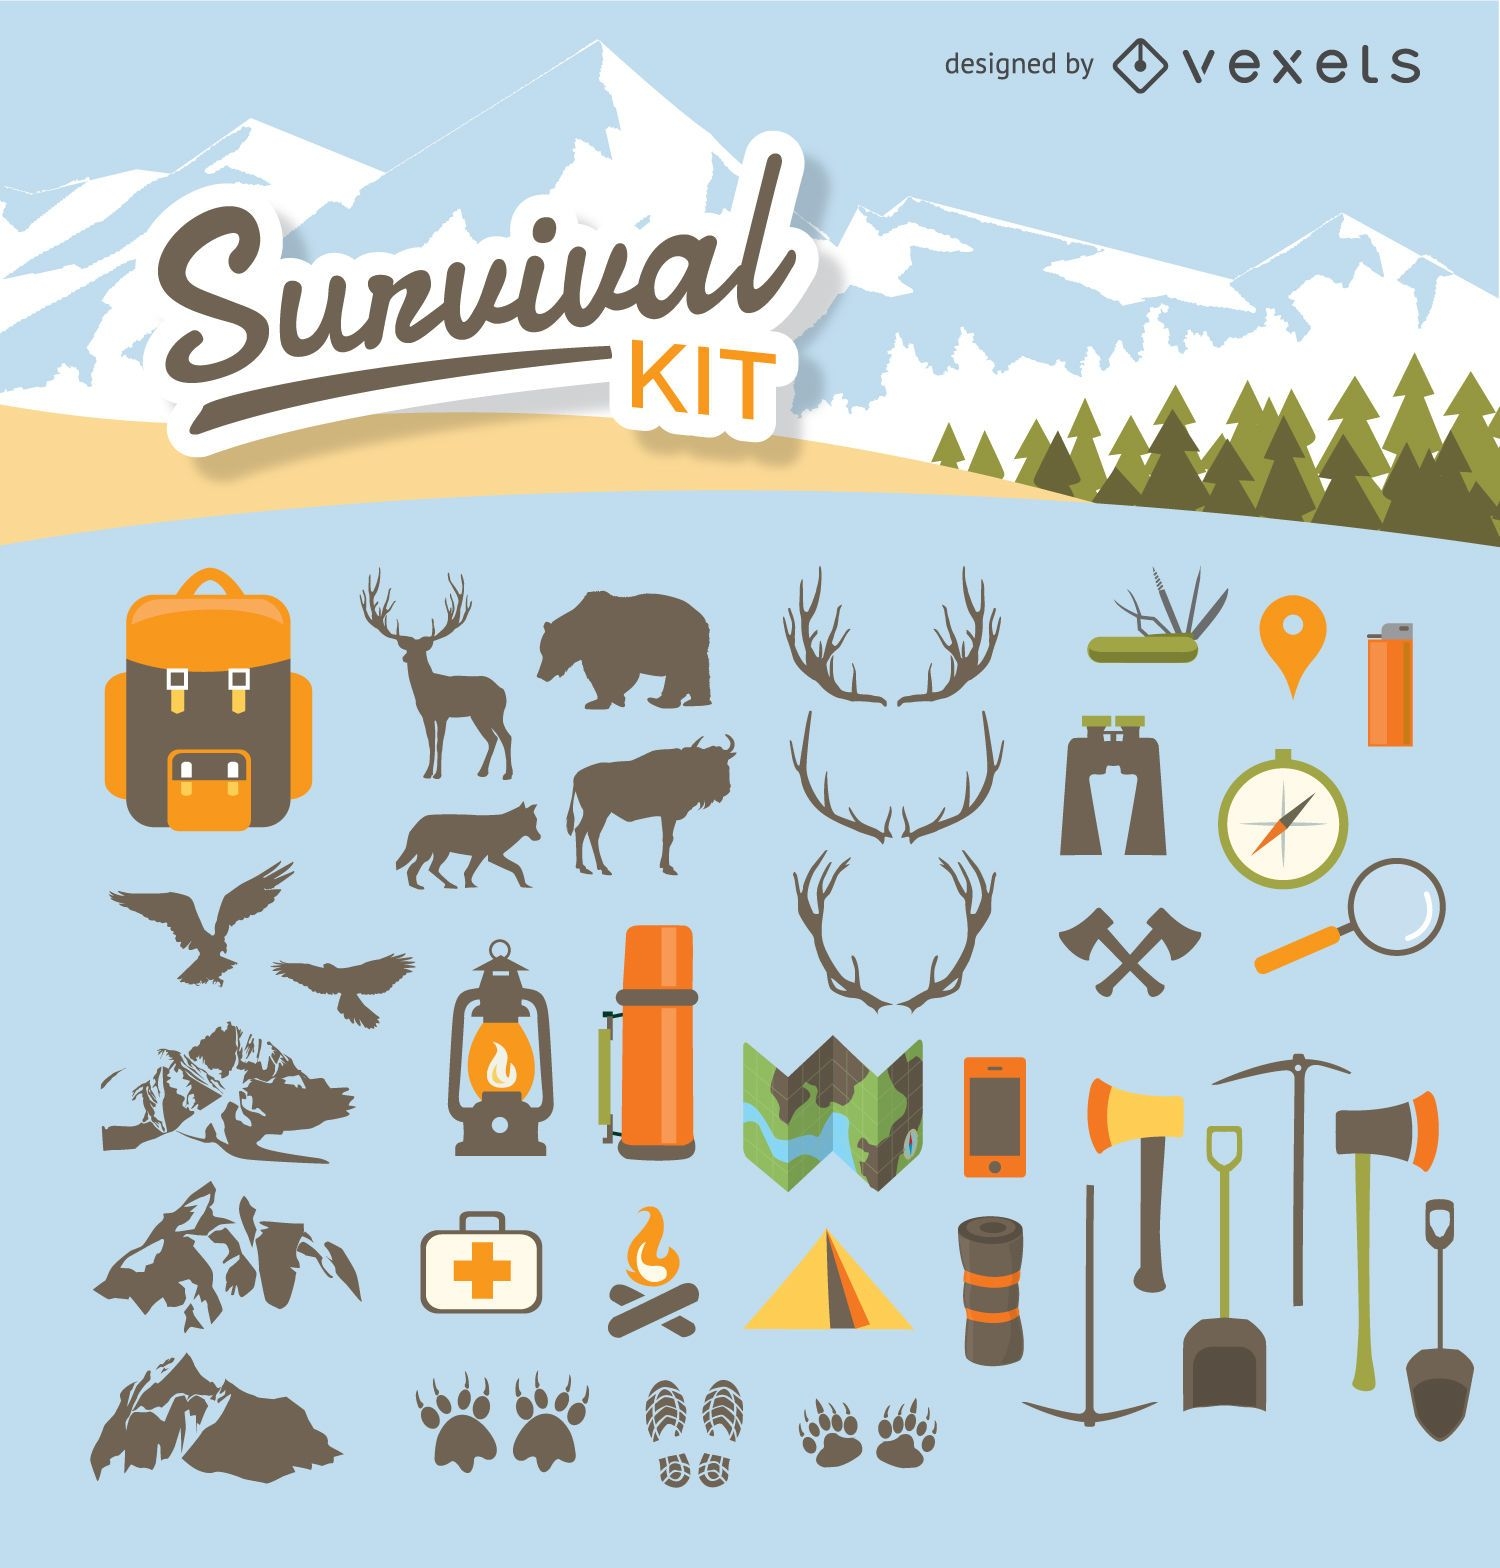 Kit de supervivencia para acampar